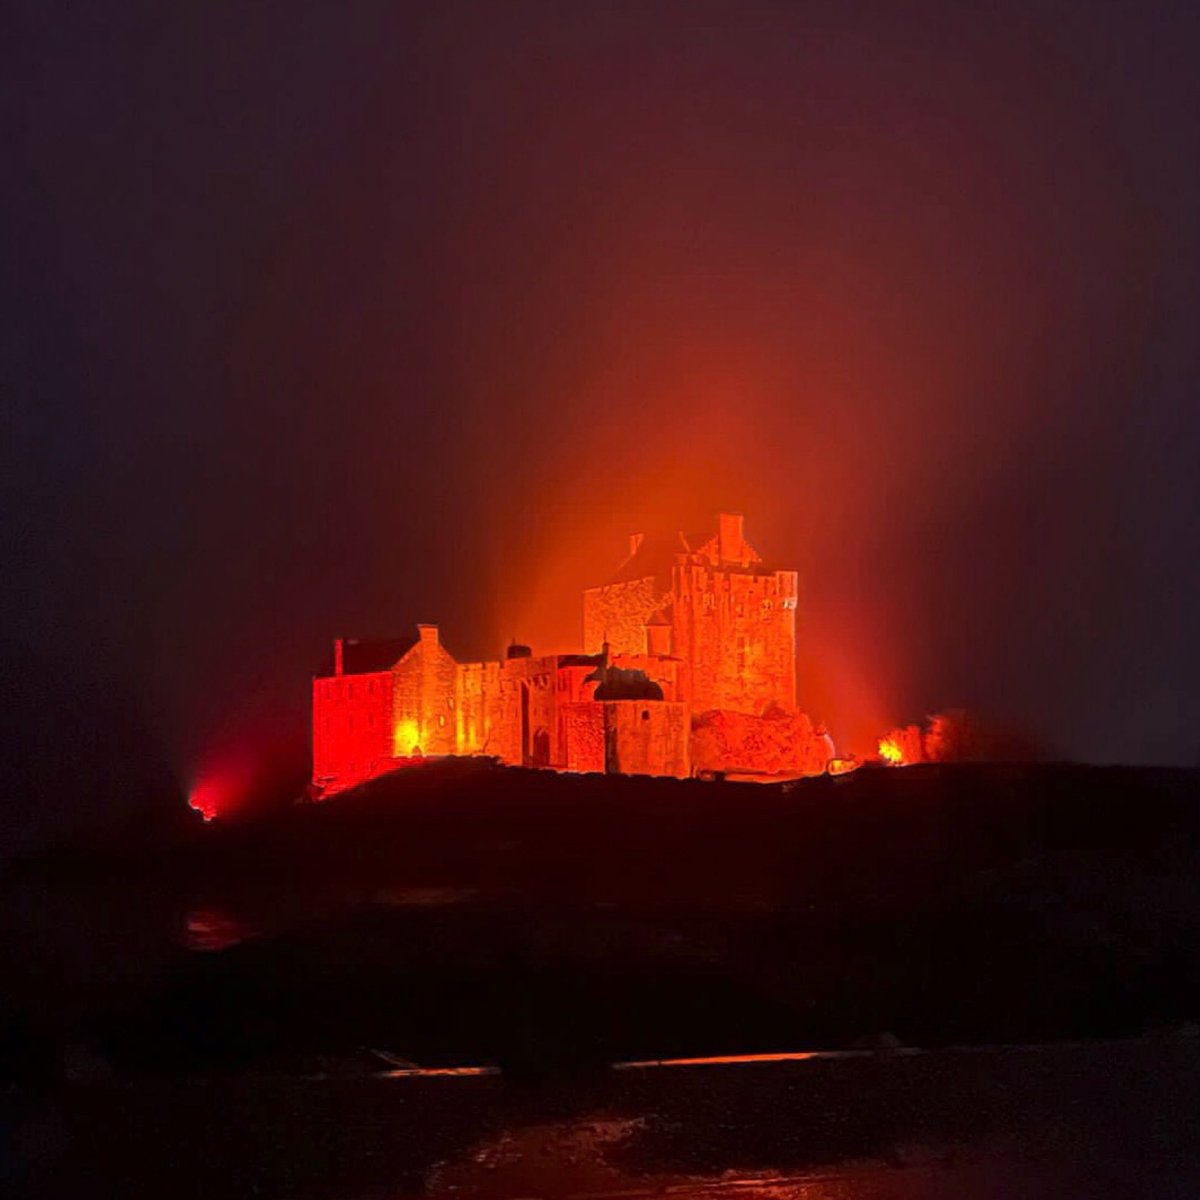 Eilean Donan Castle in the mist - Lochalsh #Scotland #RemembranceDay2021 @angie_weather @ThePhotoHour @StormHour @VisitScotland